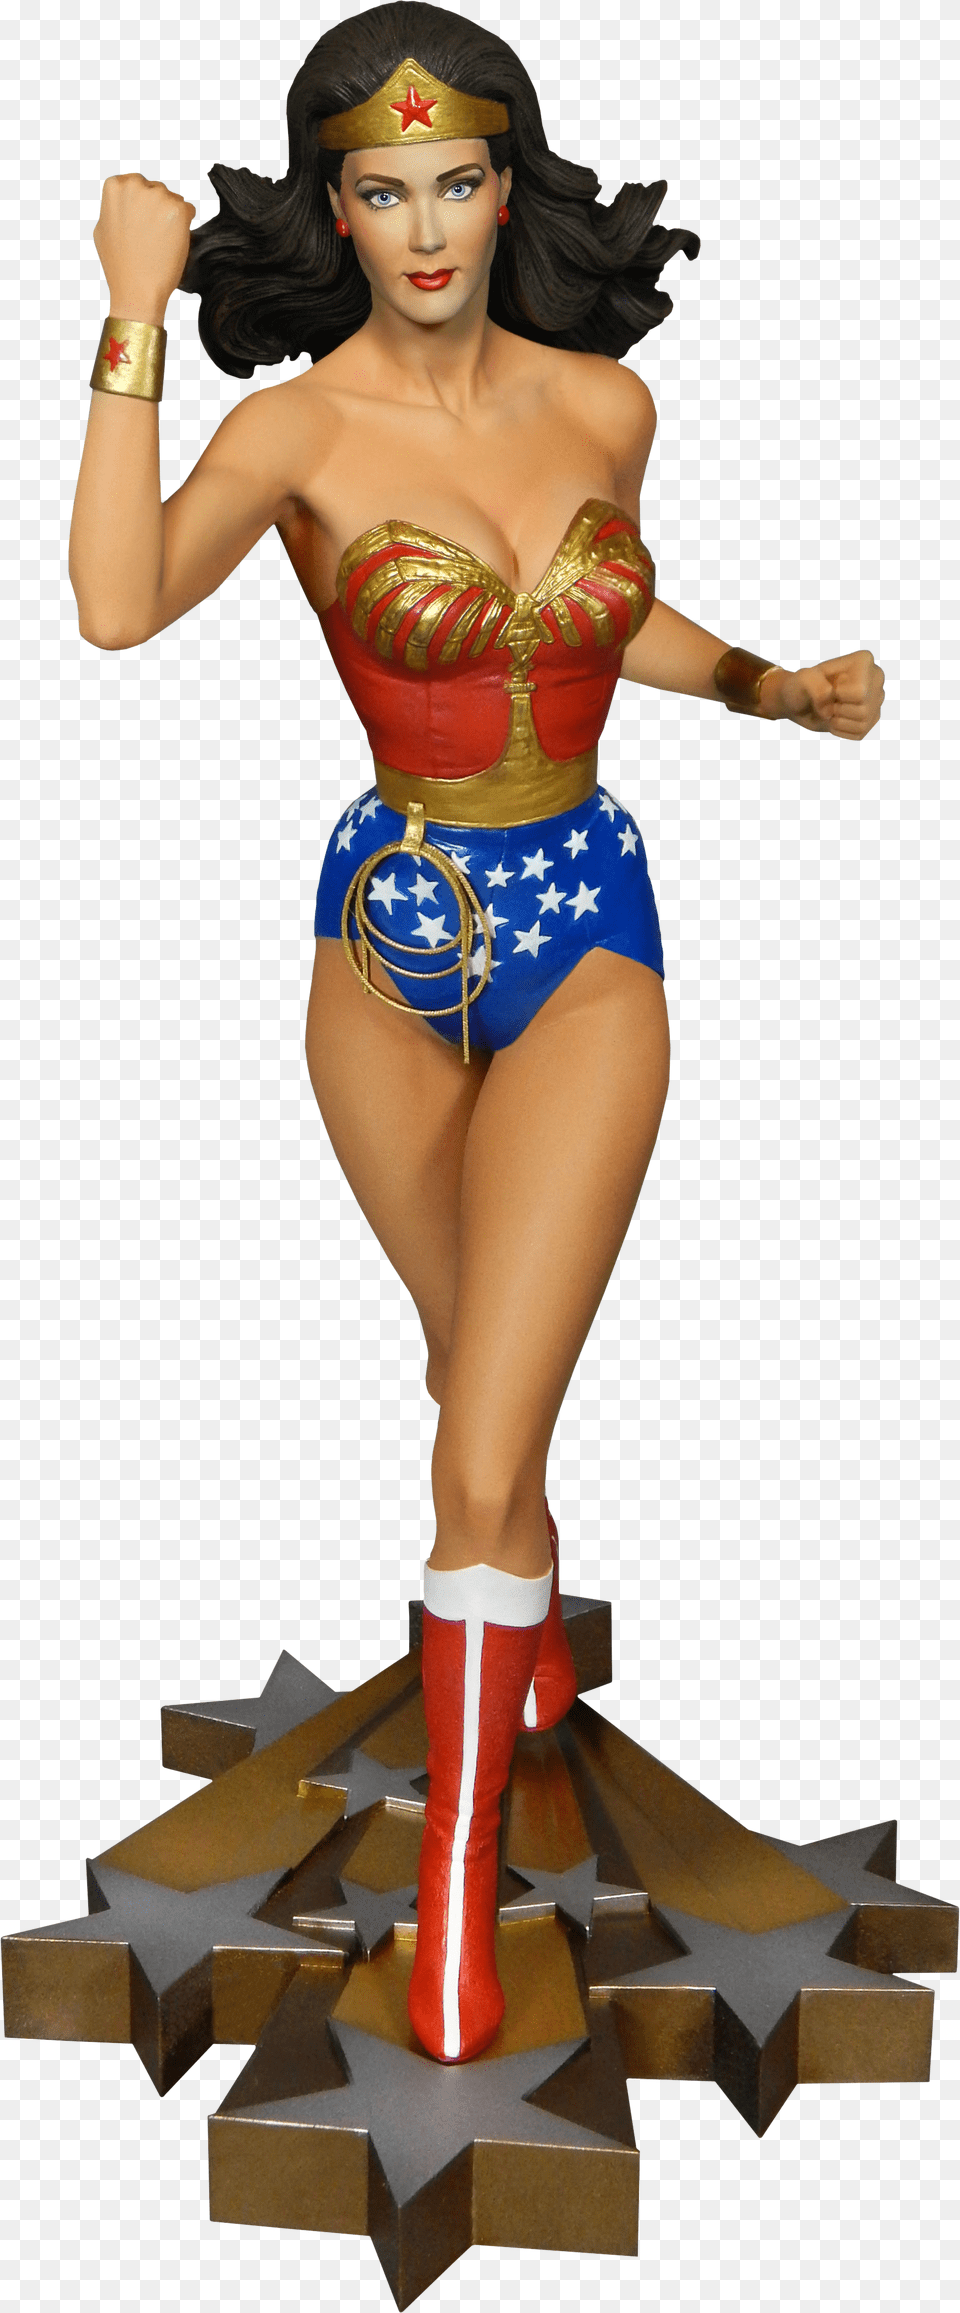 Tweeterhead Lynda Carter Wonder Woman Statue, Clothing, Costume, Person, Adult Png Image